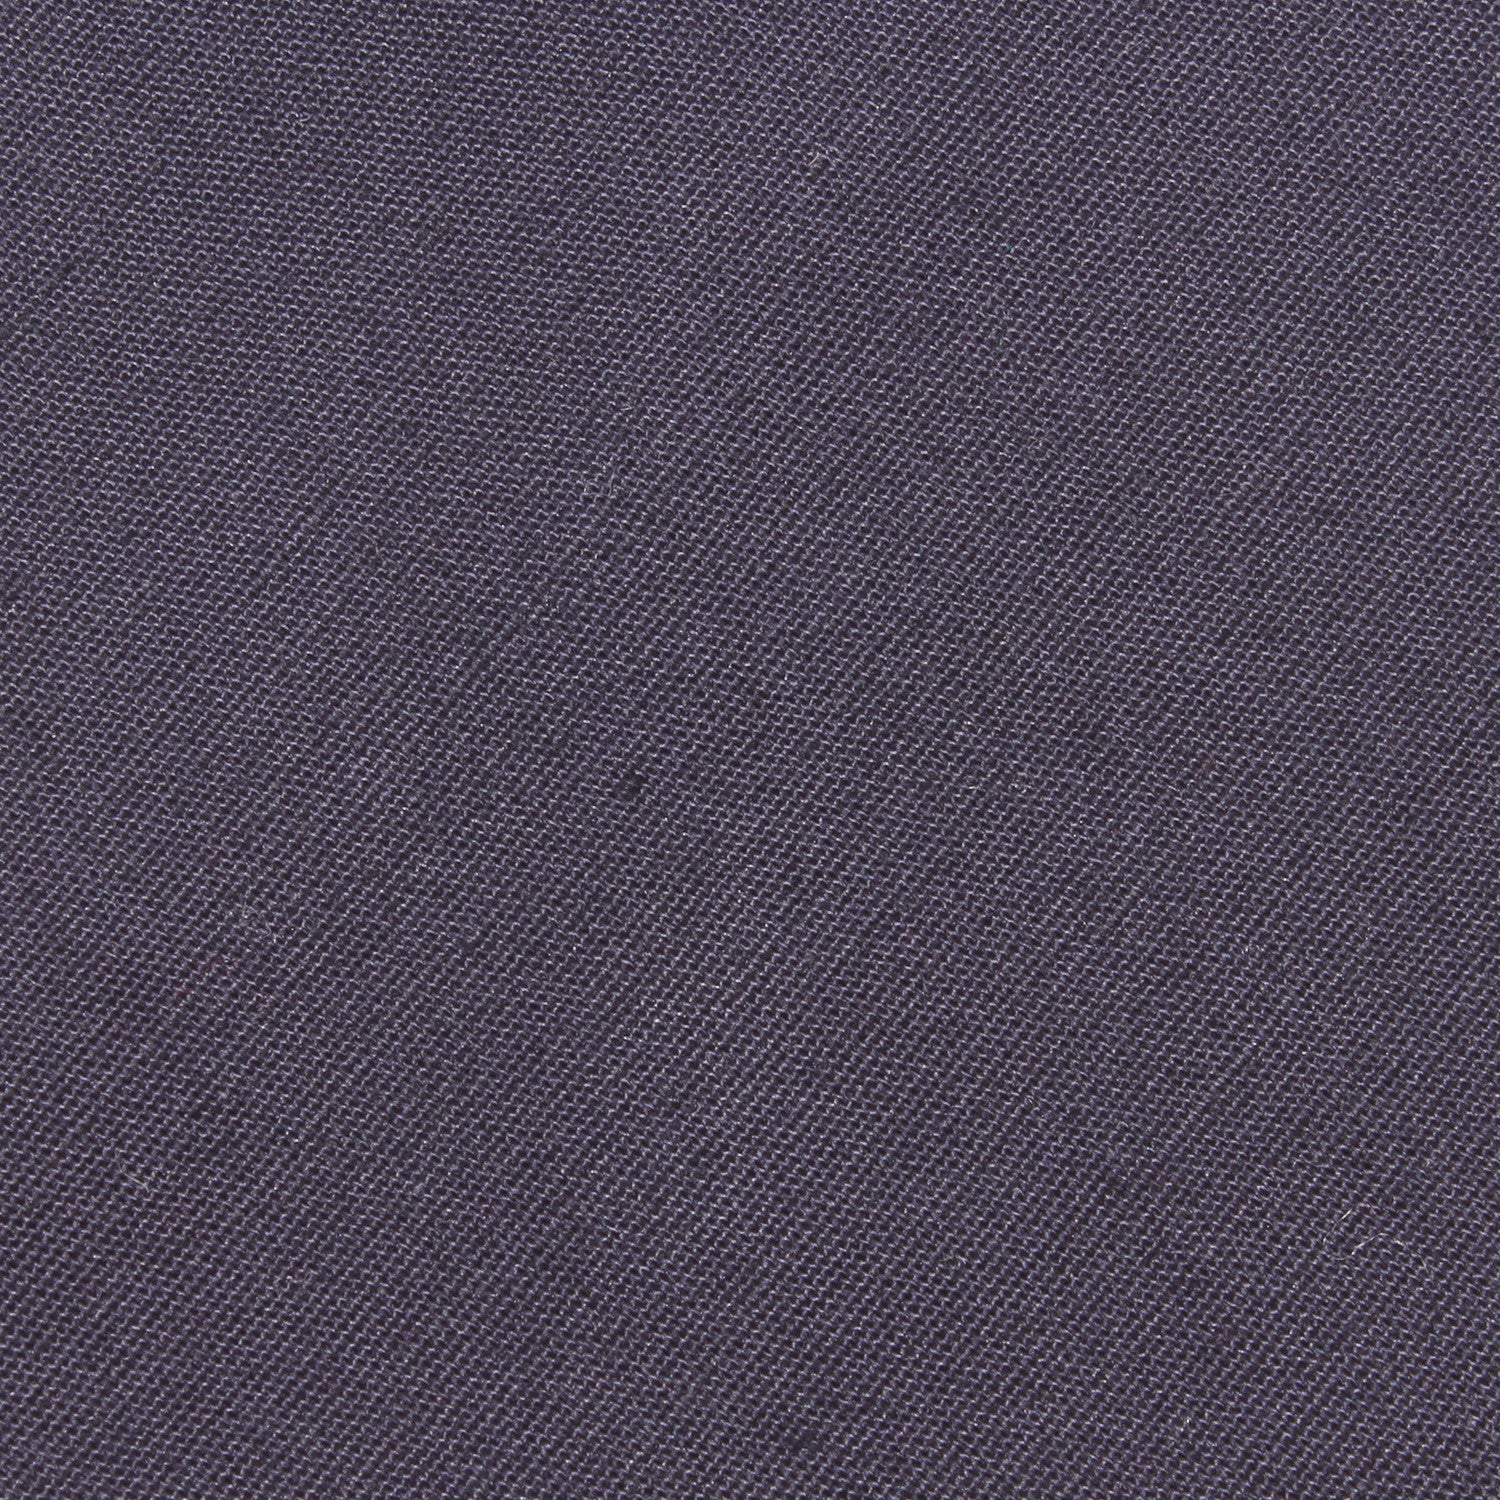 Navy Blue Cotton Skinny Tie Fabric